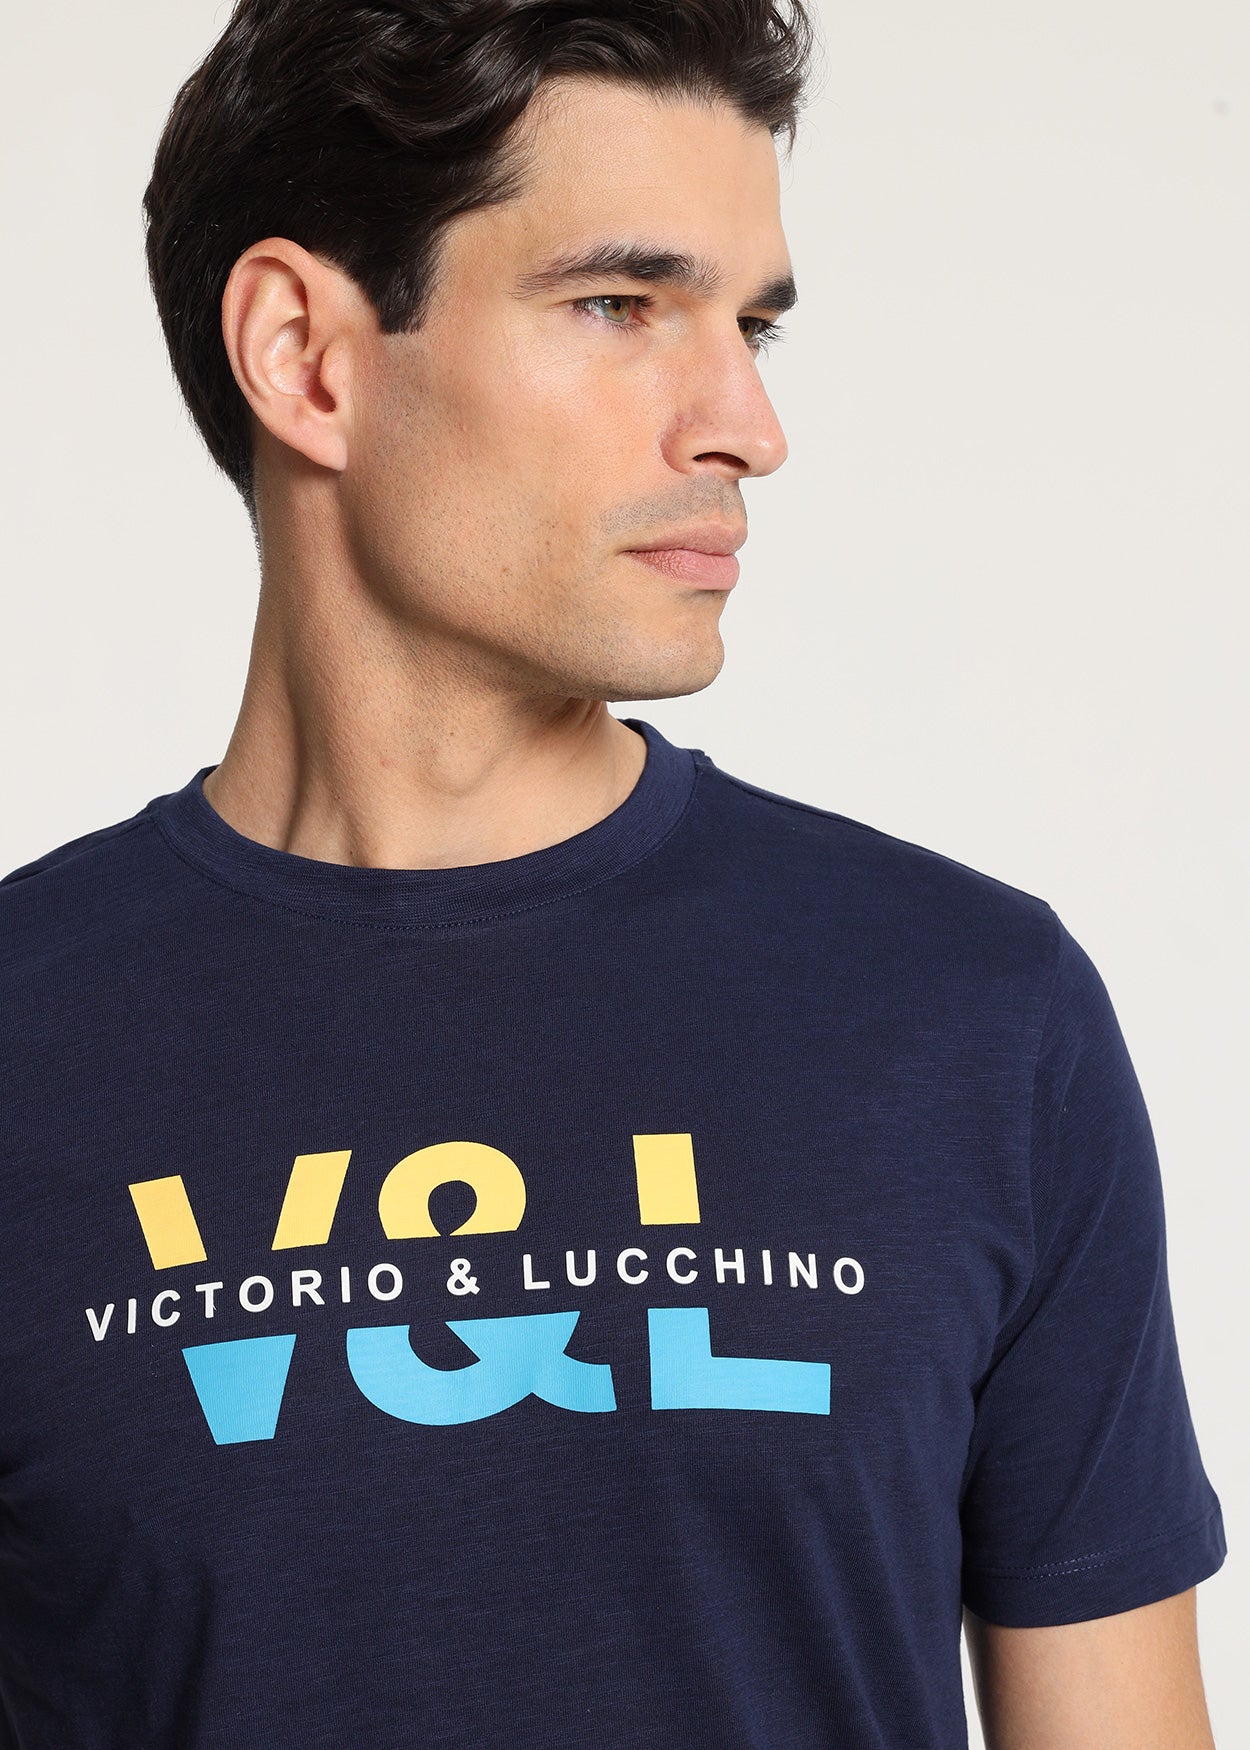 Victorio & Lucchino 650097039 Camiseta Manga Corta Grafica Pecho Con Bordado 769